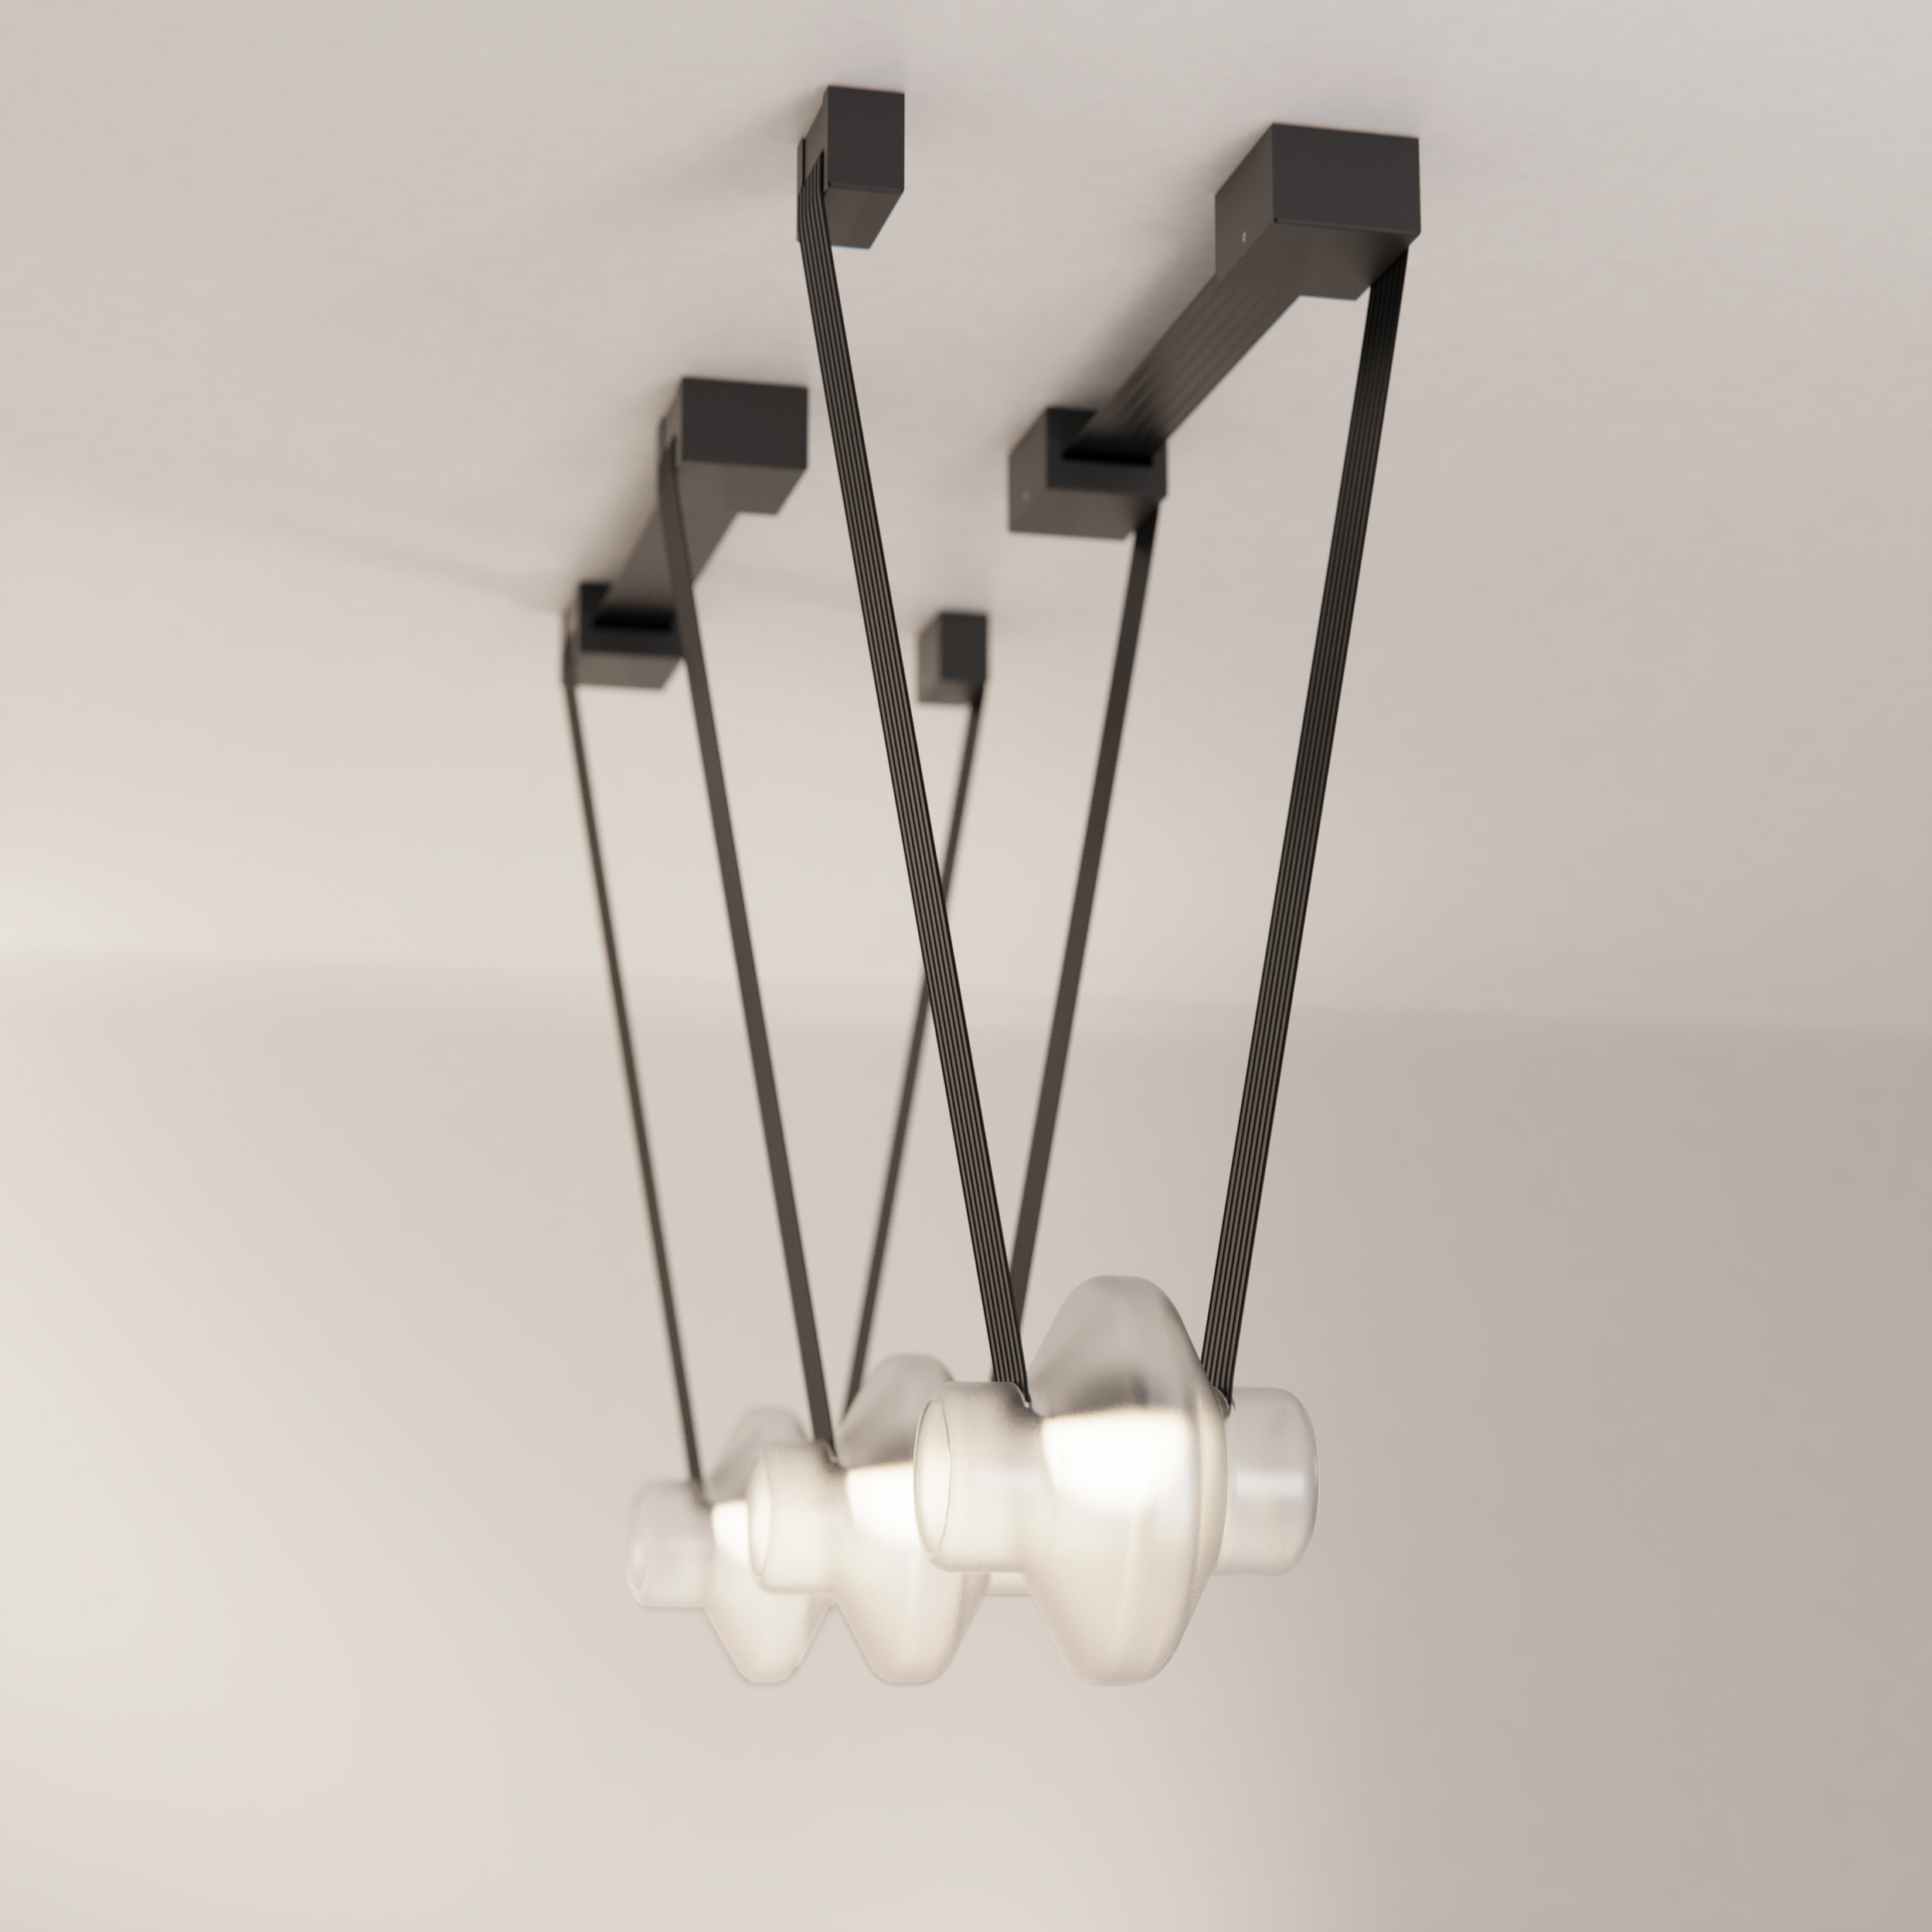 Studio d'armes Lightning Light Ceiling Lamp Design High-end Contemporary Etat des lieux System Scalable